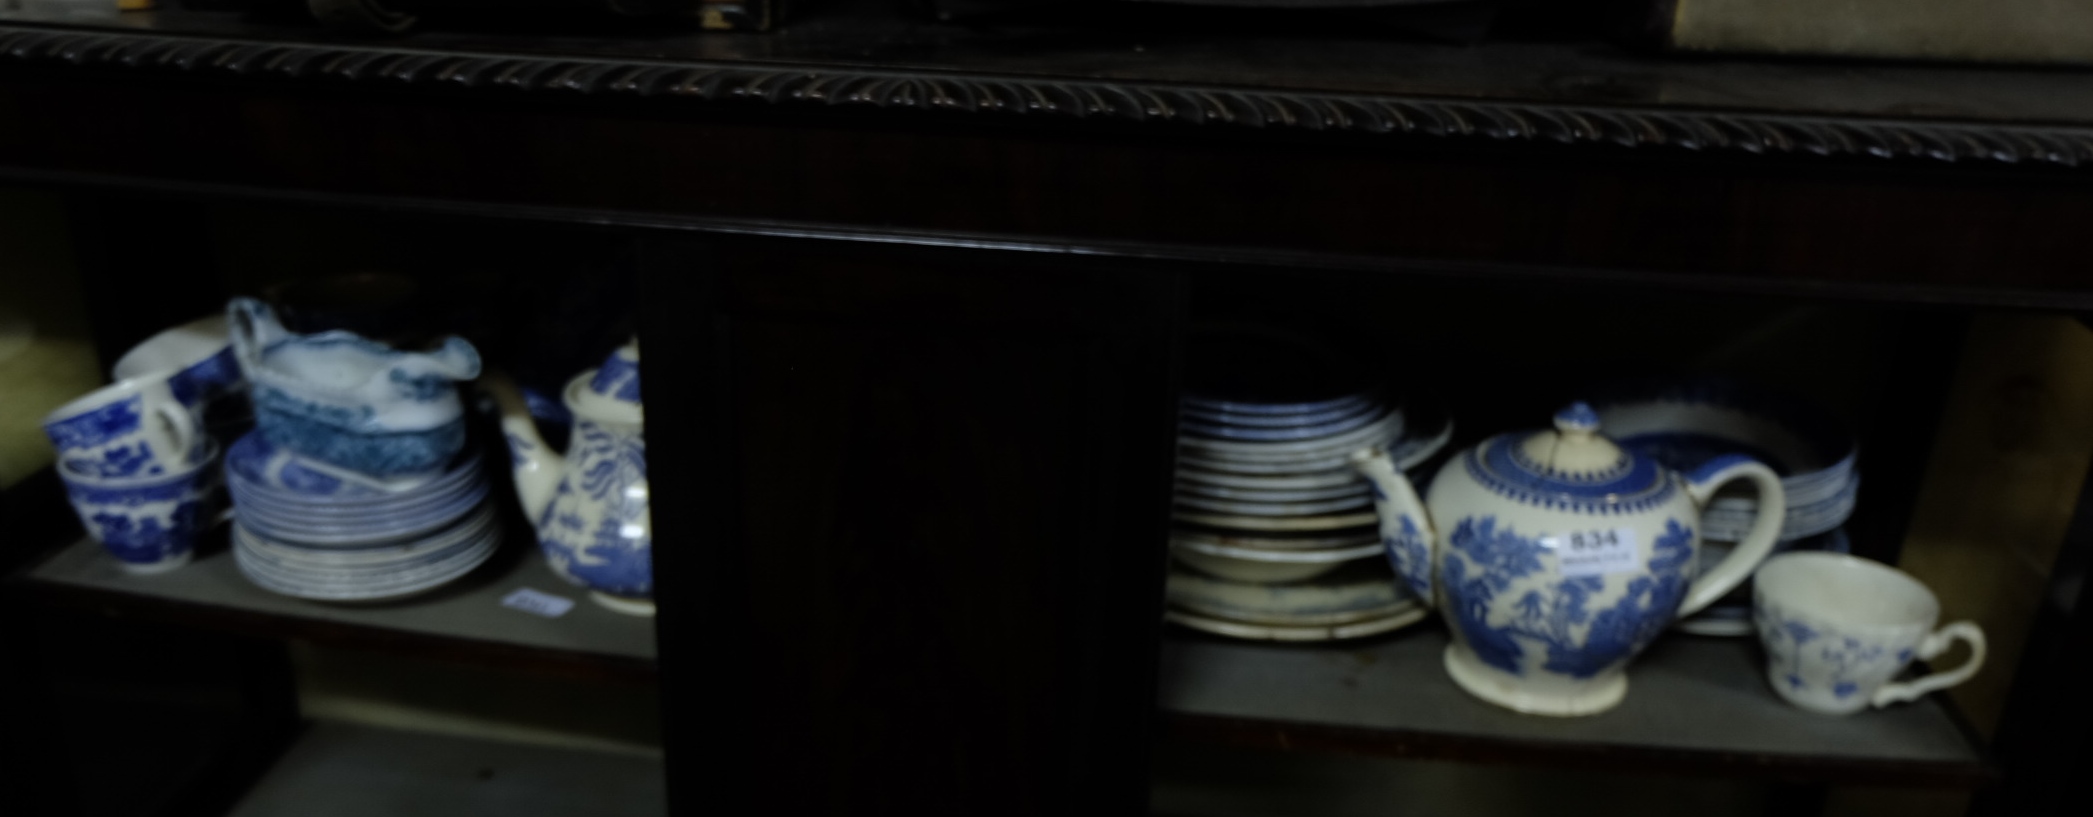 Shelf of china – mainly blue and white, cups, saucers, tea plates etc